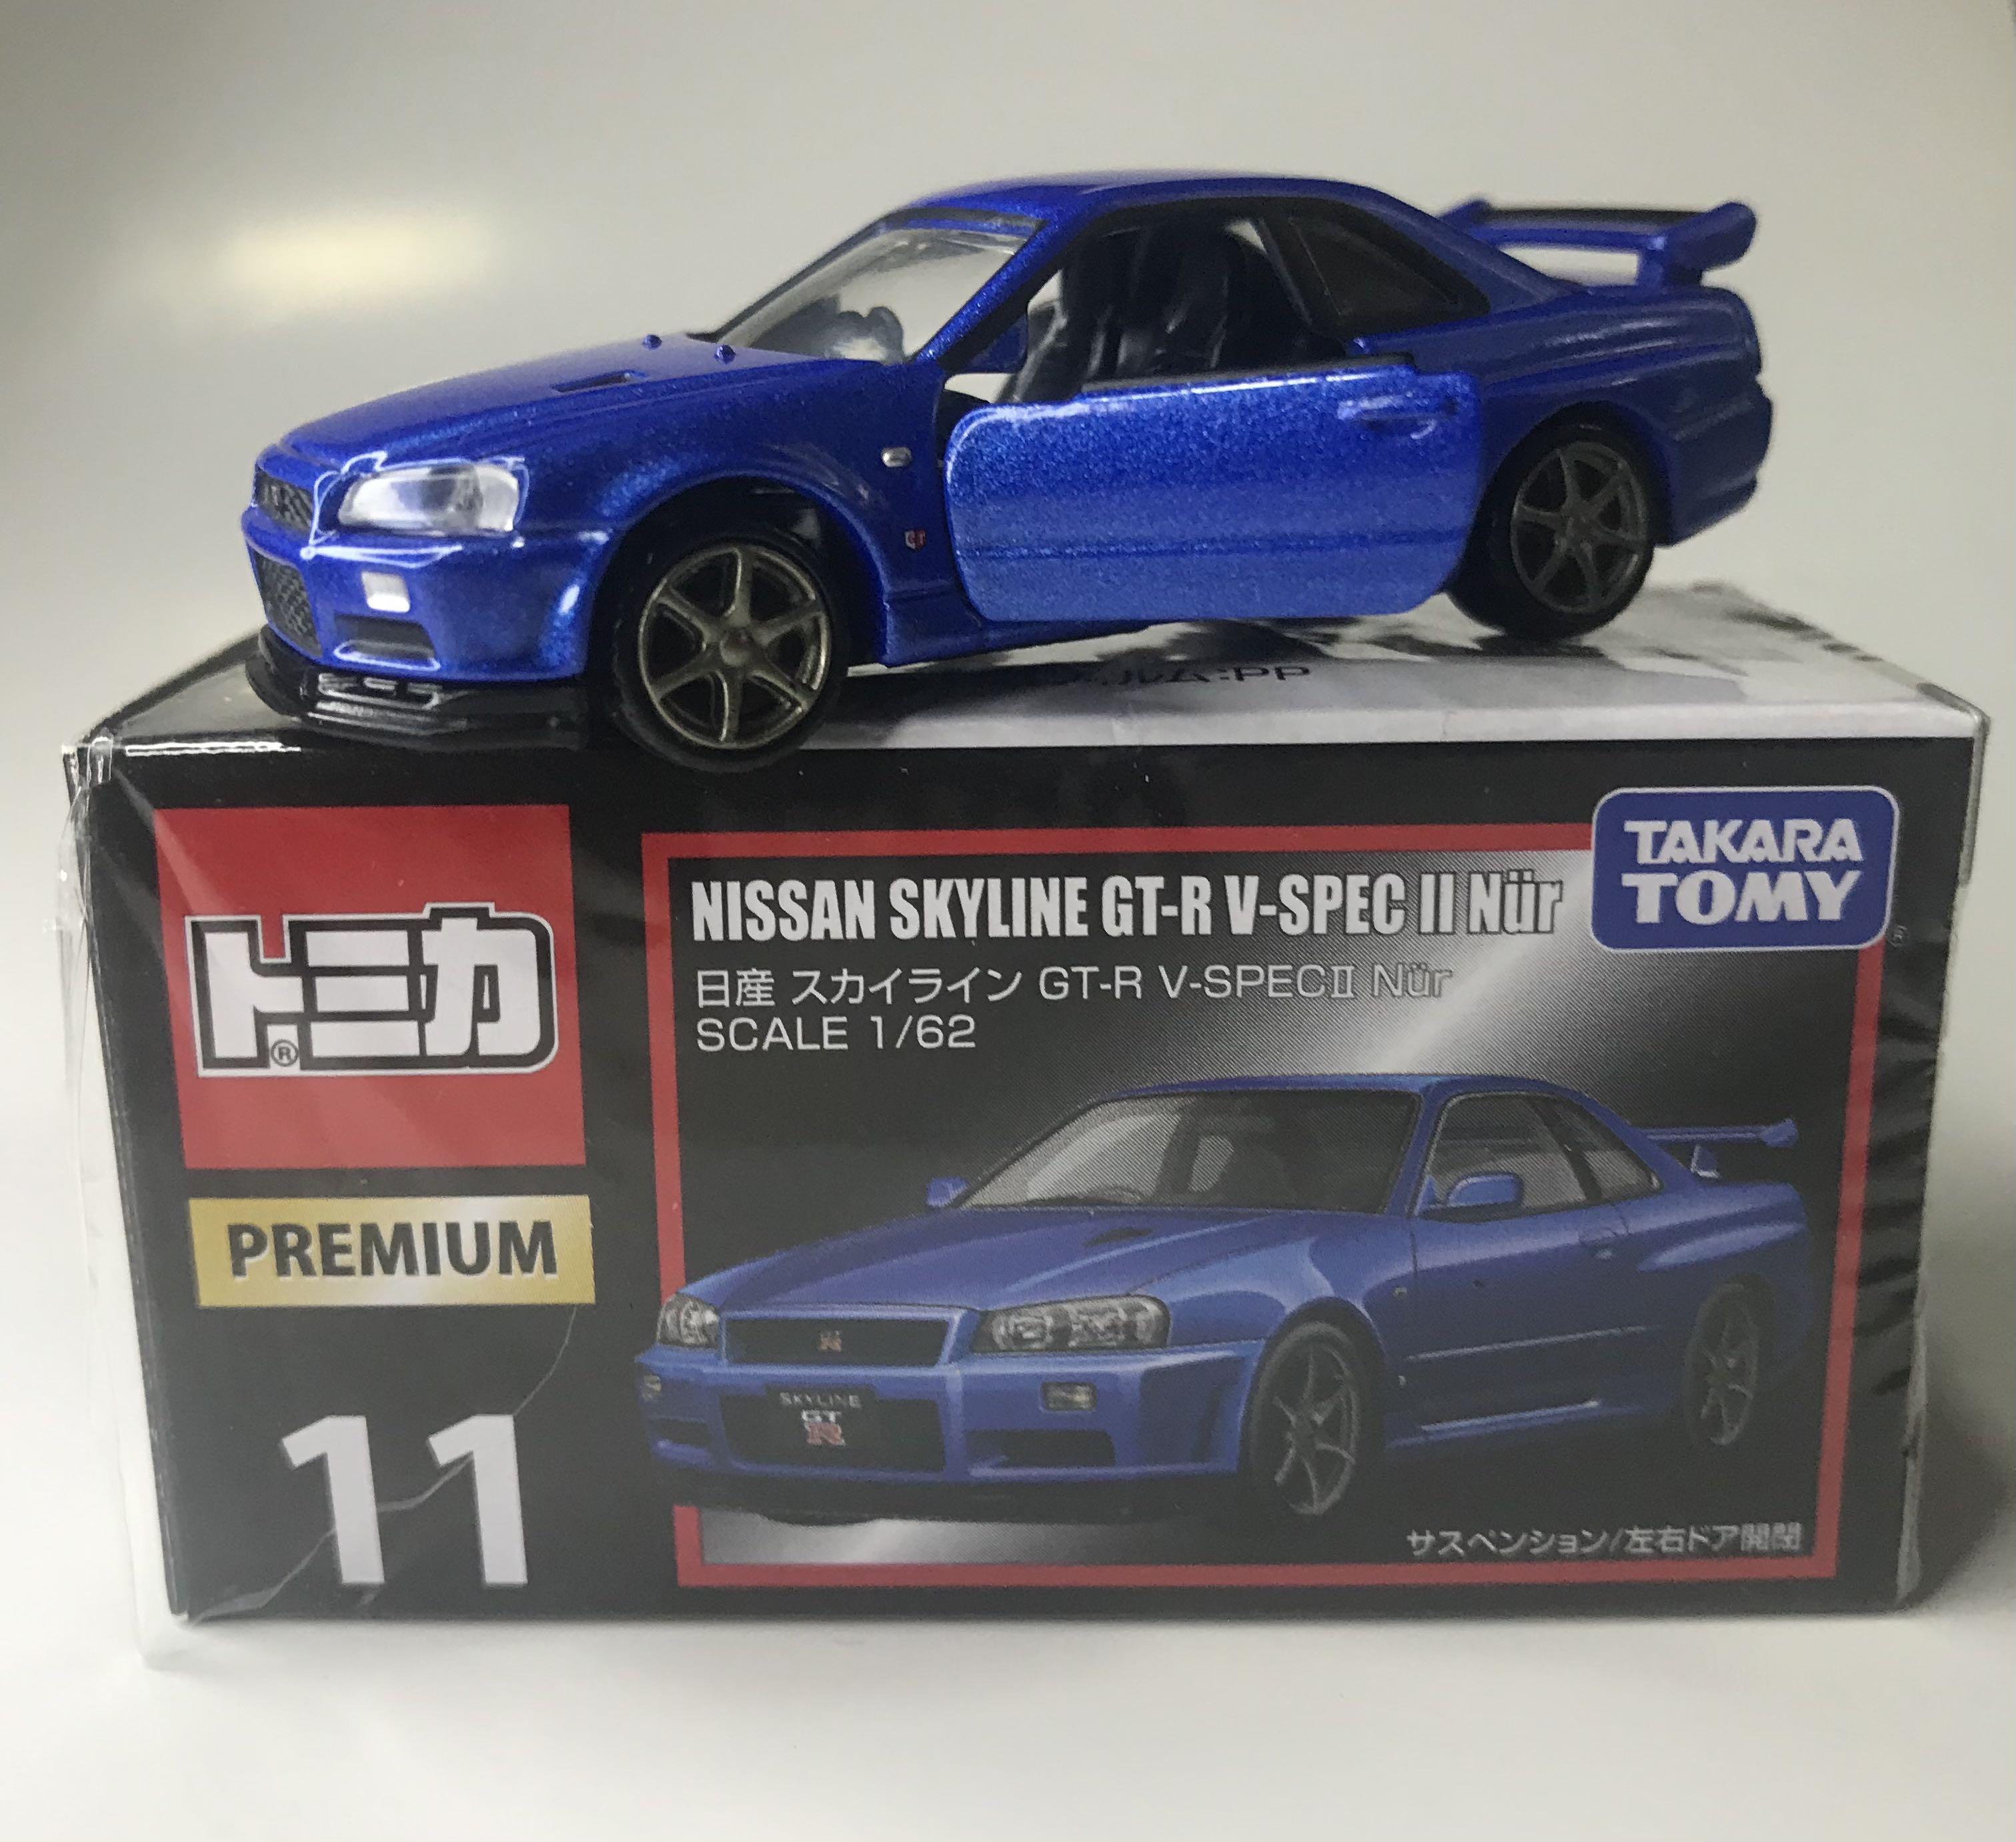 Takara Tomy Tomica Premium #11 Nissan Skyline GT-R V-Spec II Nür